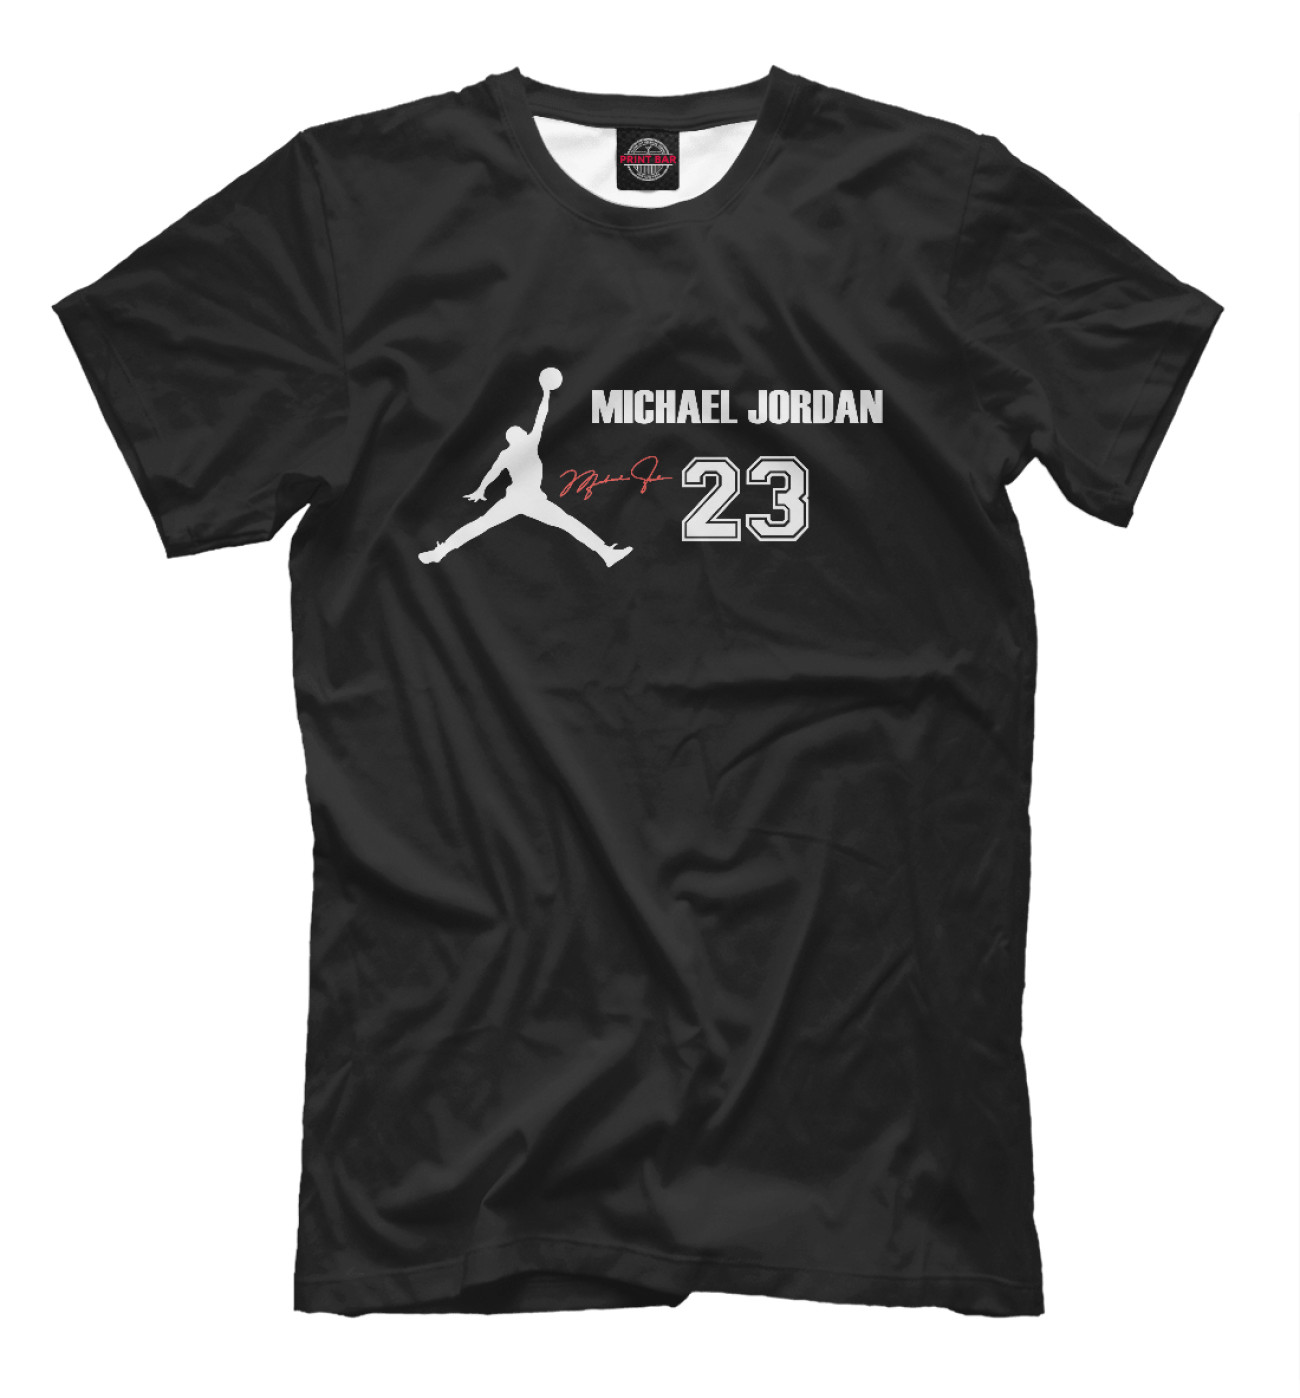 Мужская Футболка Air Jordan (Аир Джордан), артикул: MKN-378795-fut-2